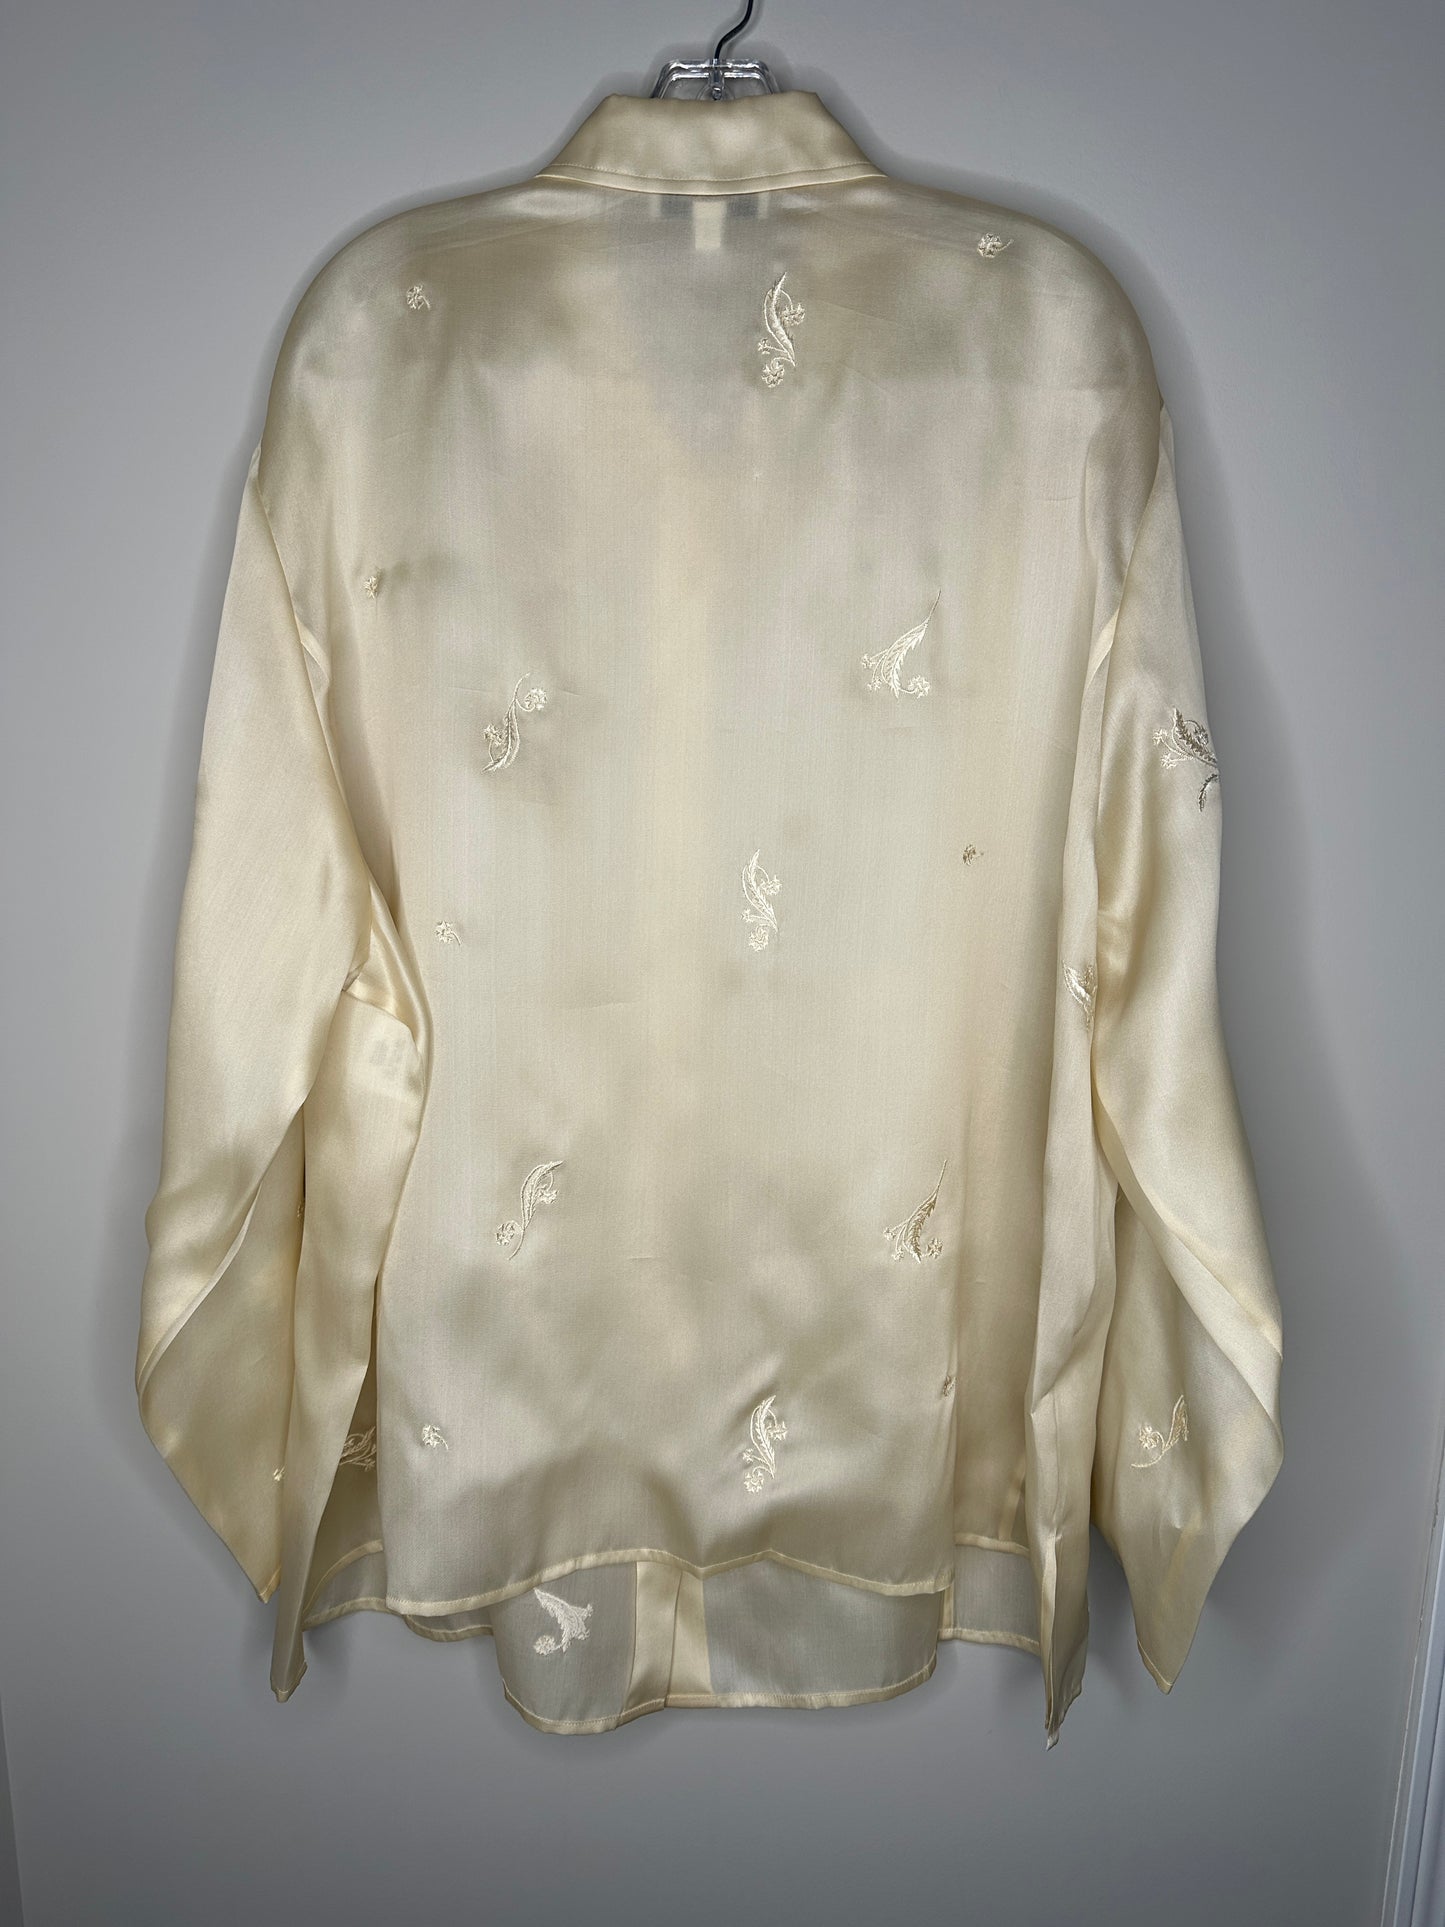 Emanuel Ungaro Woman Size 24/58 Tan Semi-Sheer Silk Button-Up Top Blouse